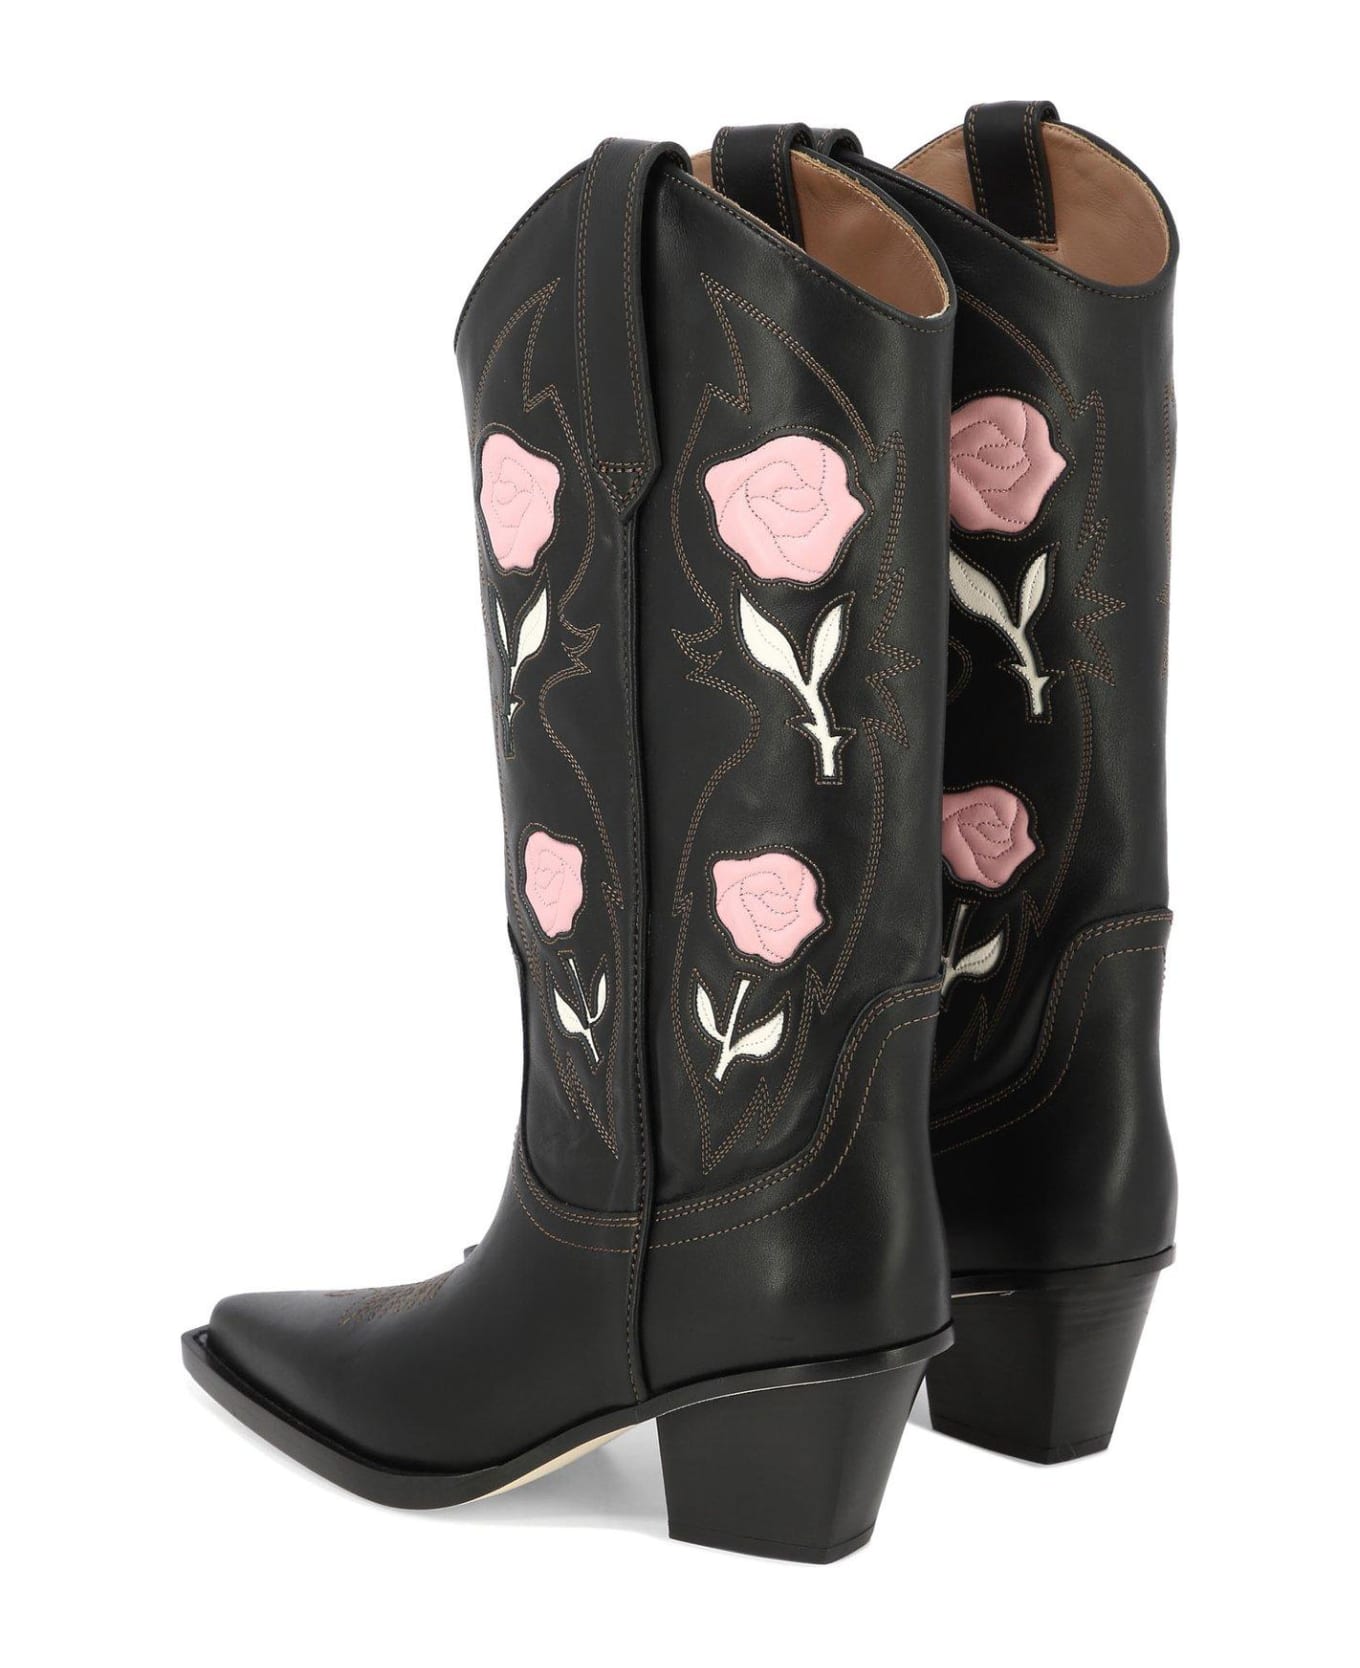 Paris Texas Rosalia Pointed Toe Boots - Black